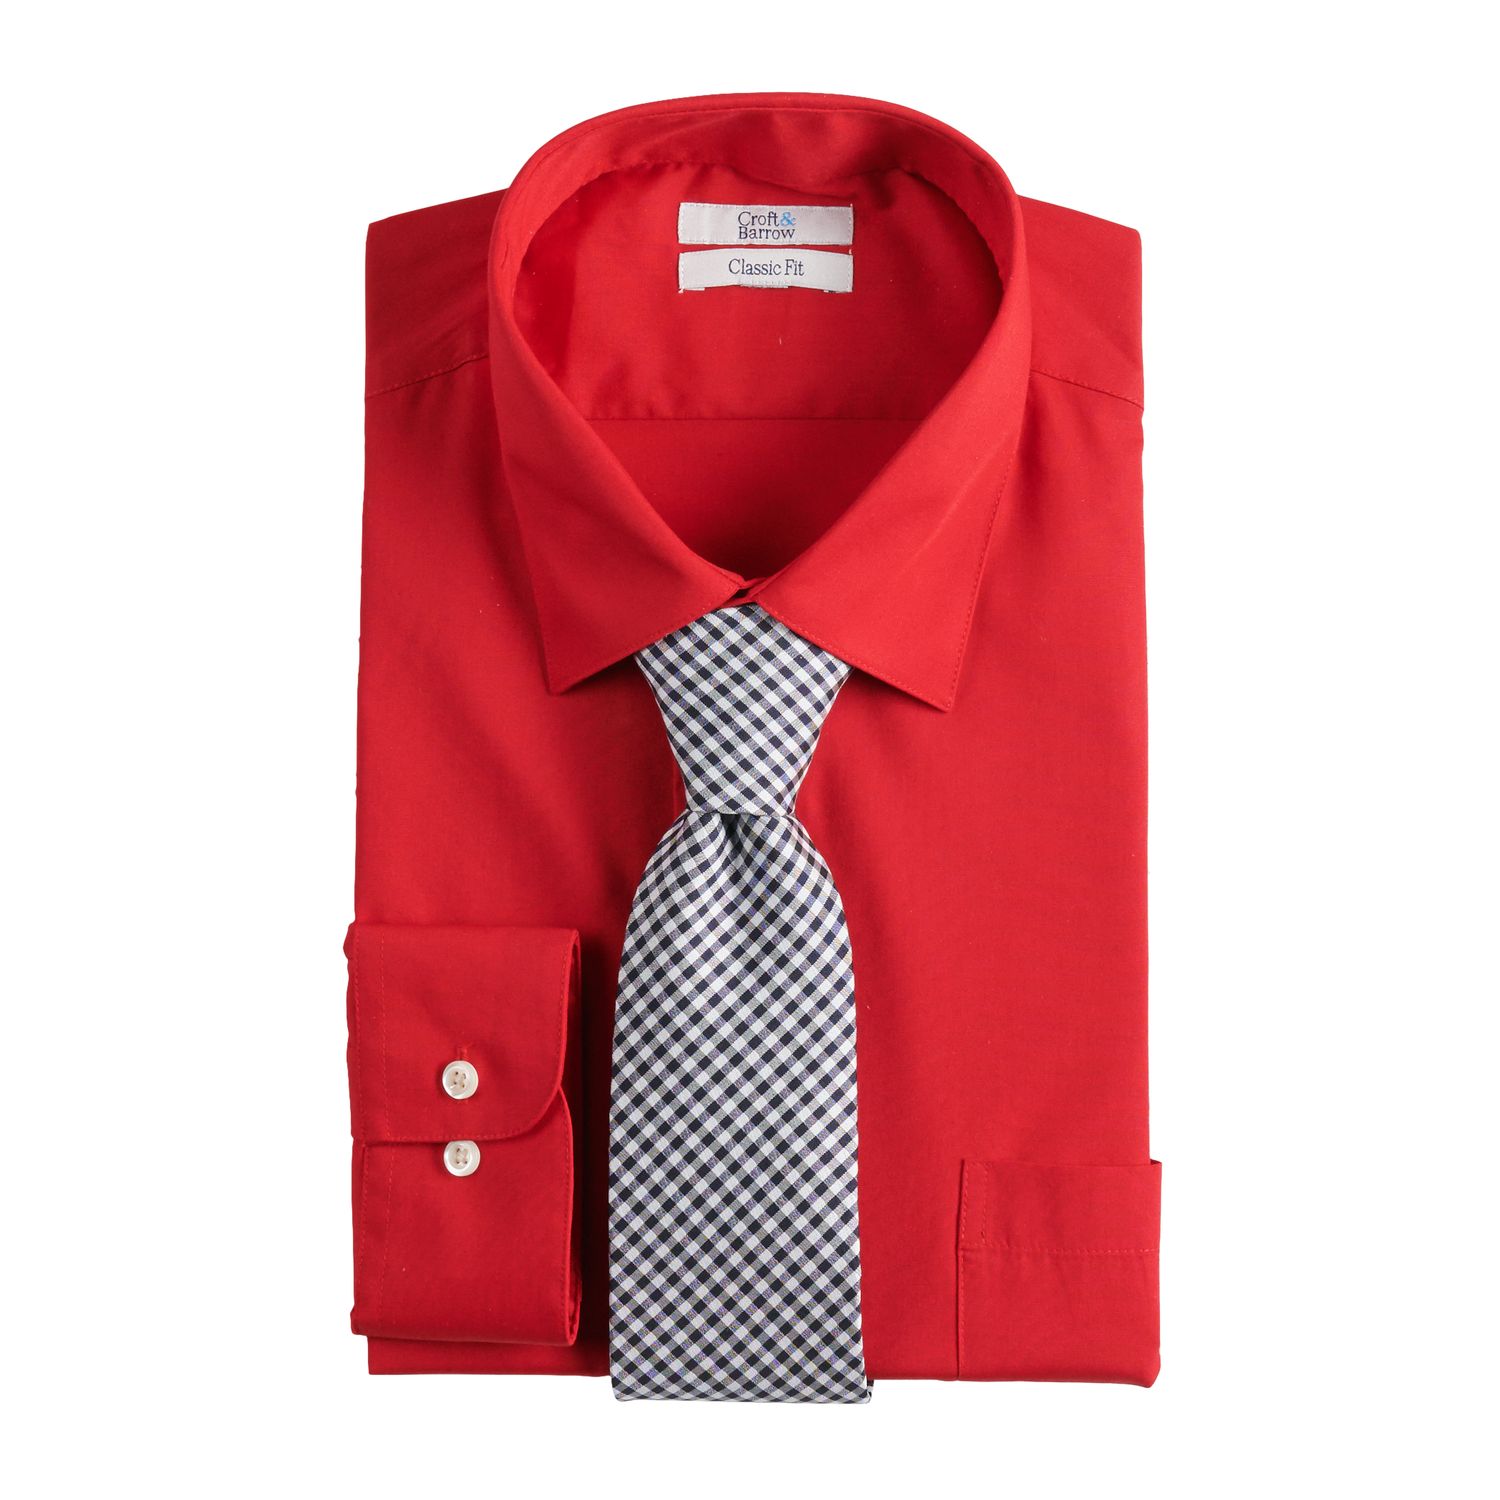 Tall Croft ☀ Barrow® Dress Shirt ☀ Tie Set